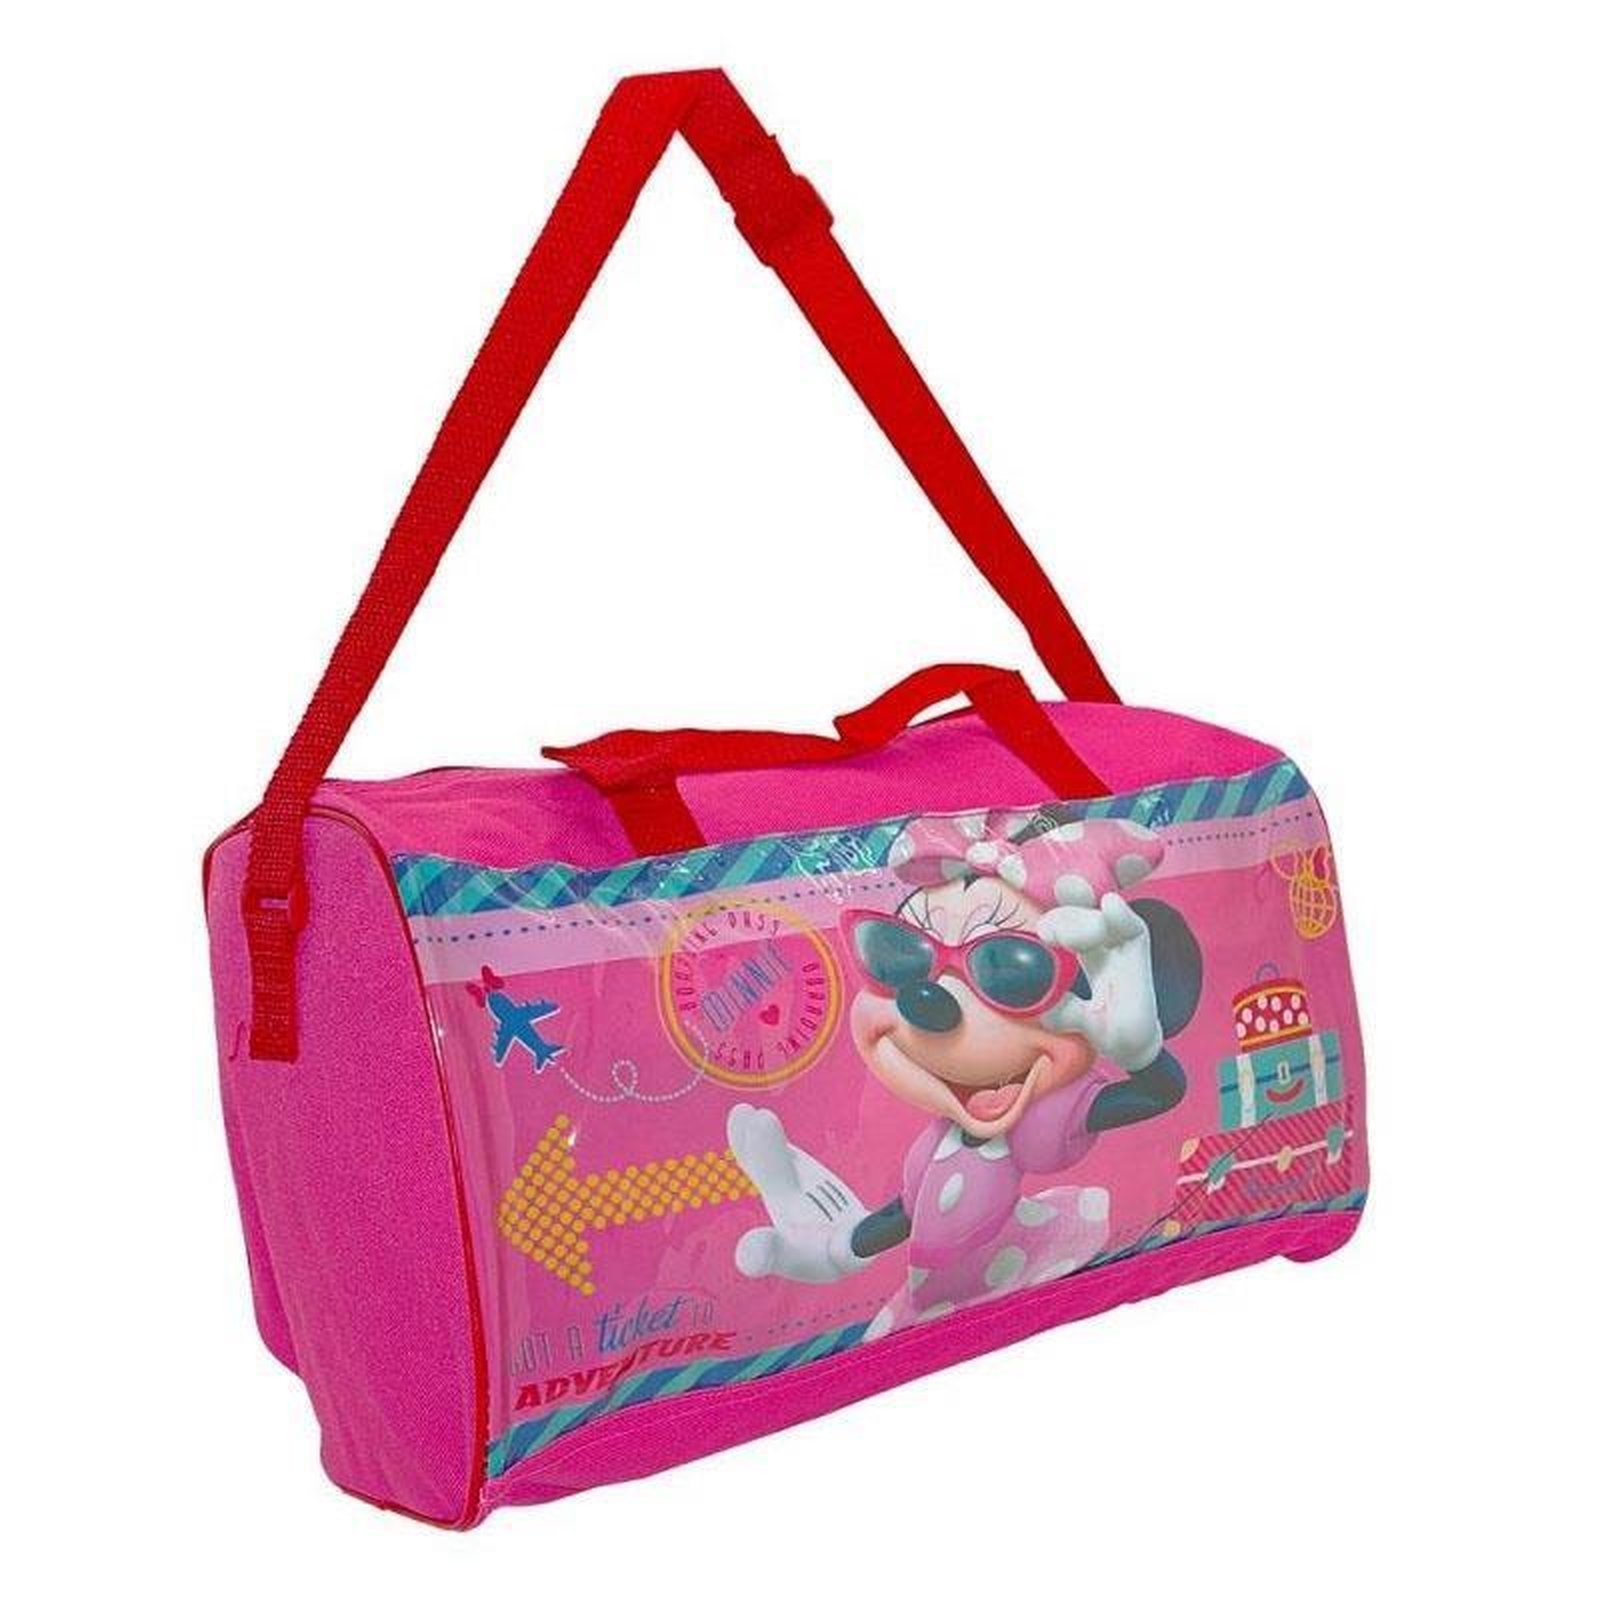 Neu Rucksack Kinder Disney Sporttasche Minnie Mouse pink rosa Polyester 42x33 cm 